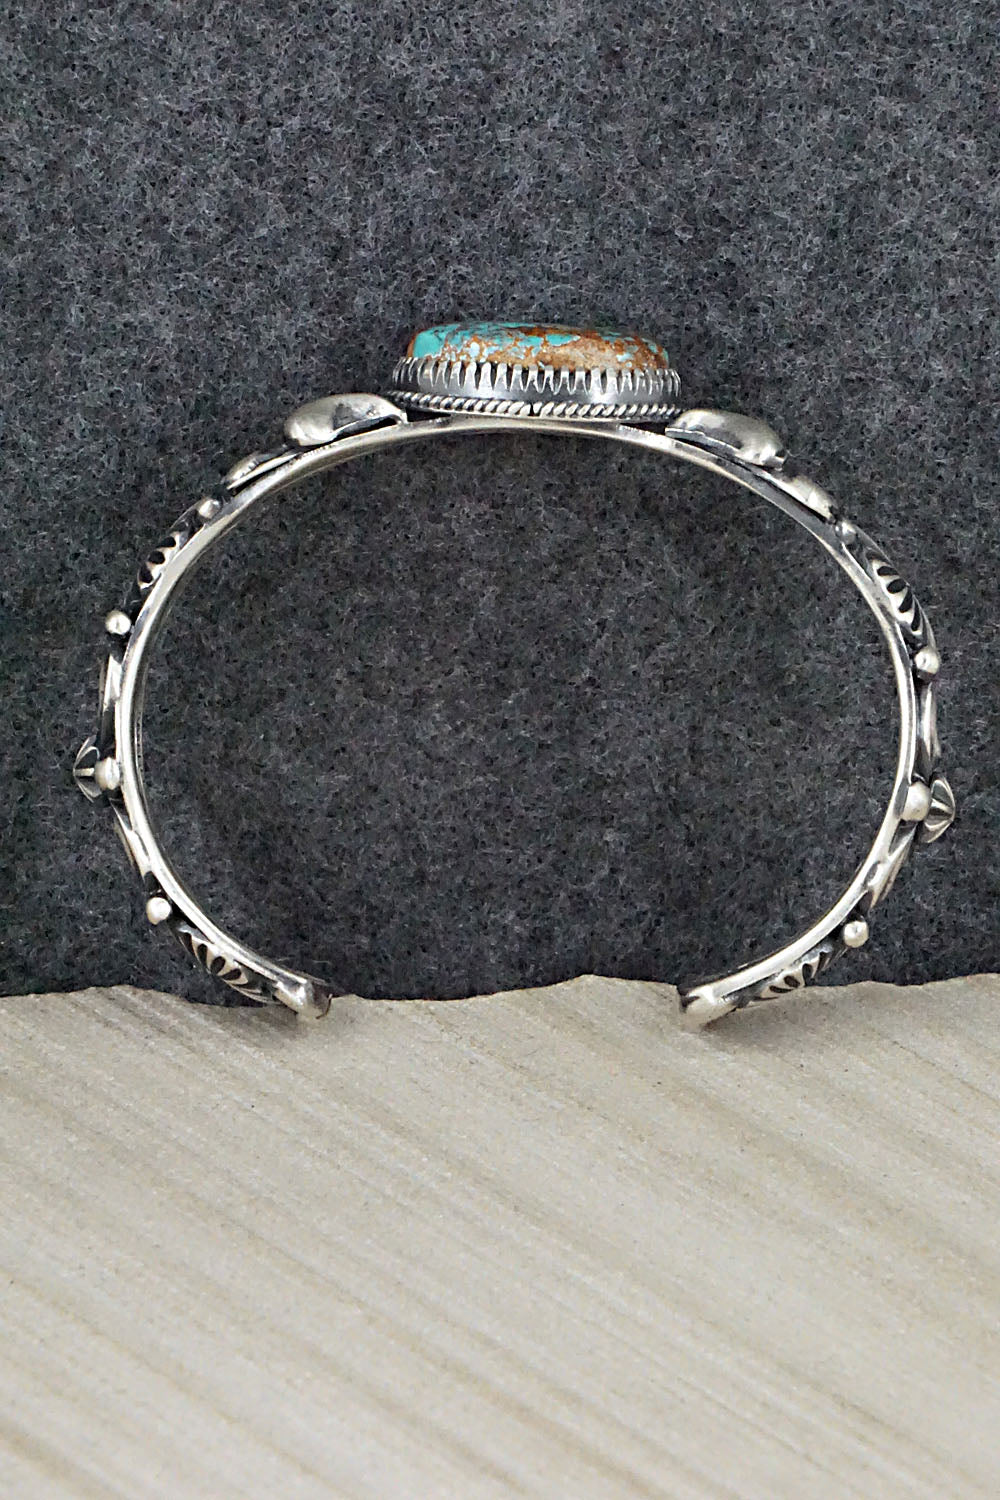 Turquoise & Sterling Silver Bracelet - Delbert Gordon